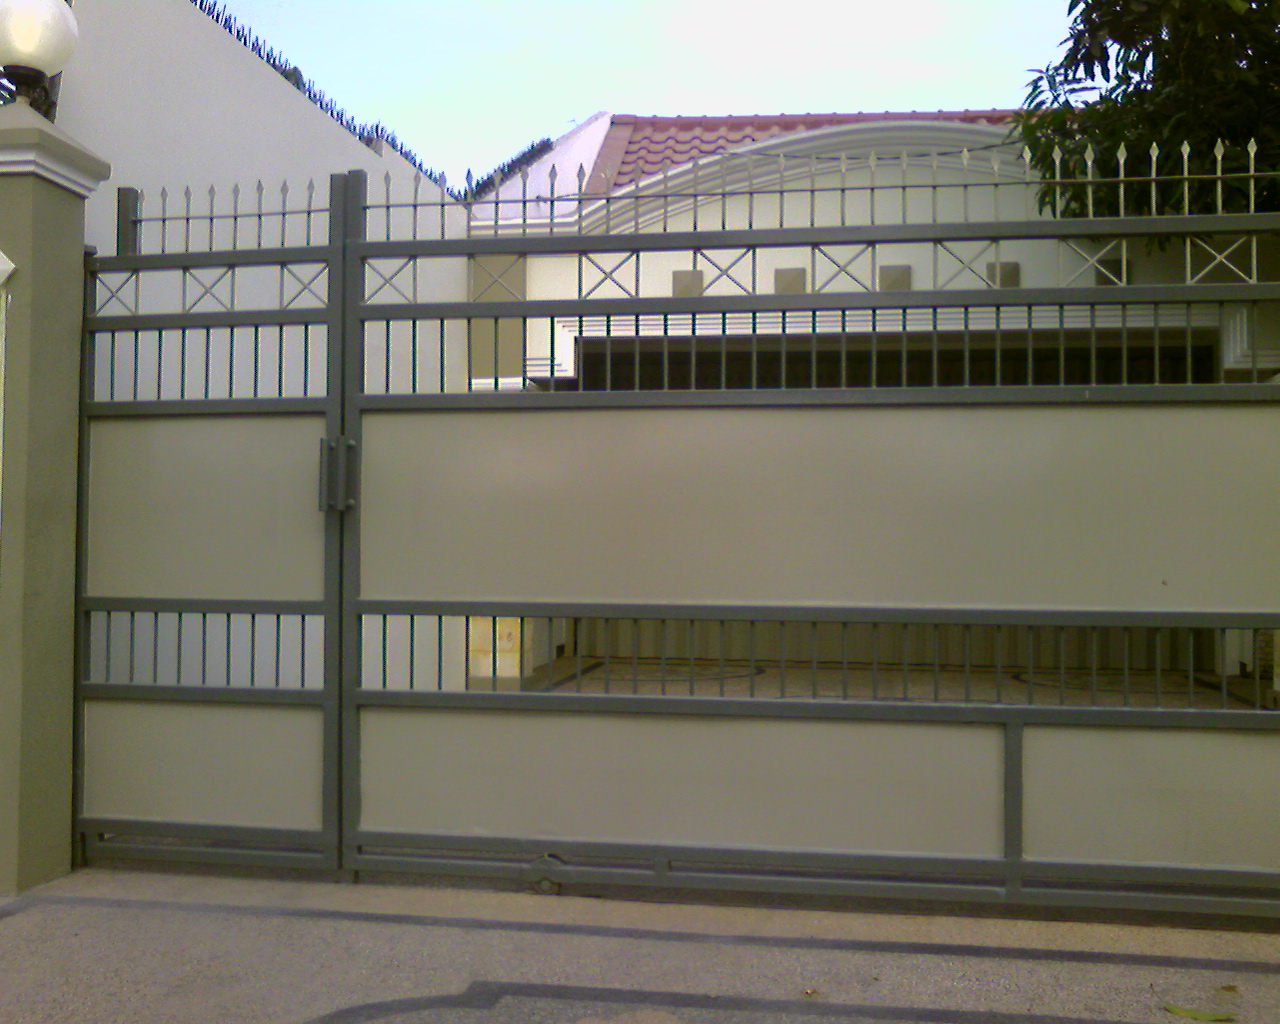 Hampir di setiap rumah diperumahan menengah dan atas, pagarnya bertema